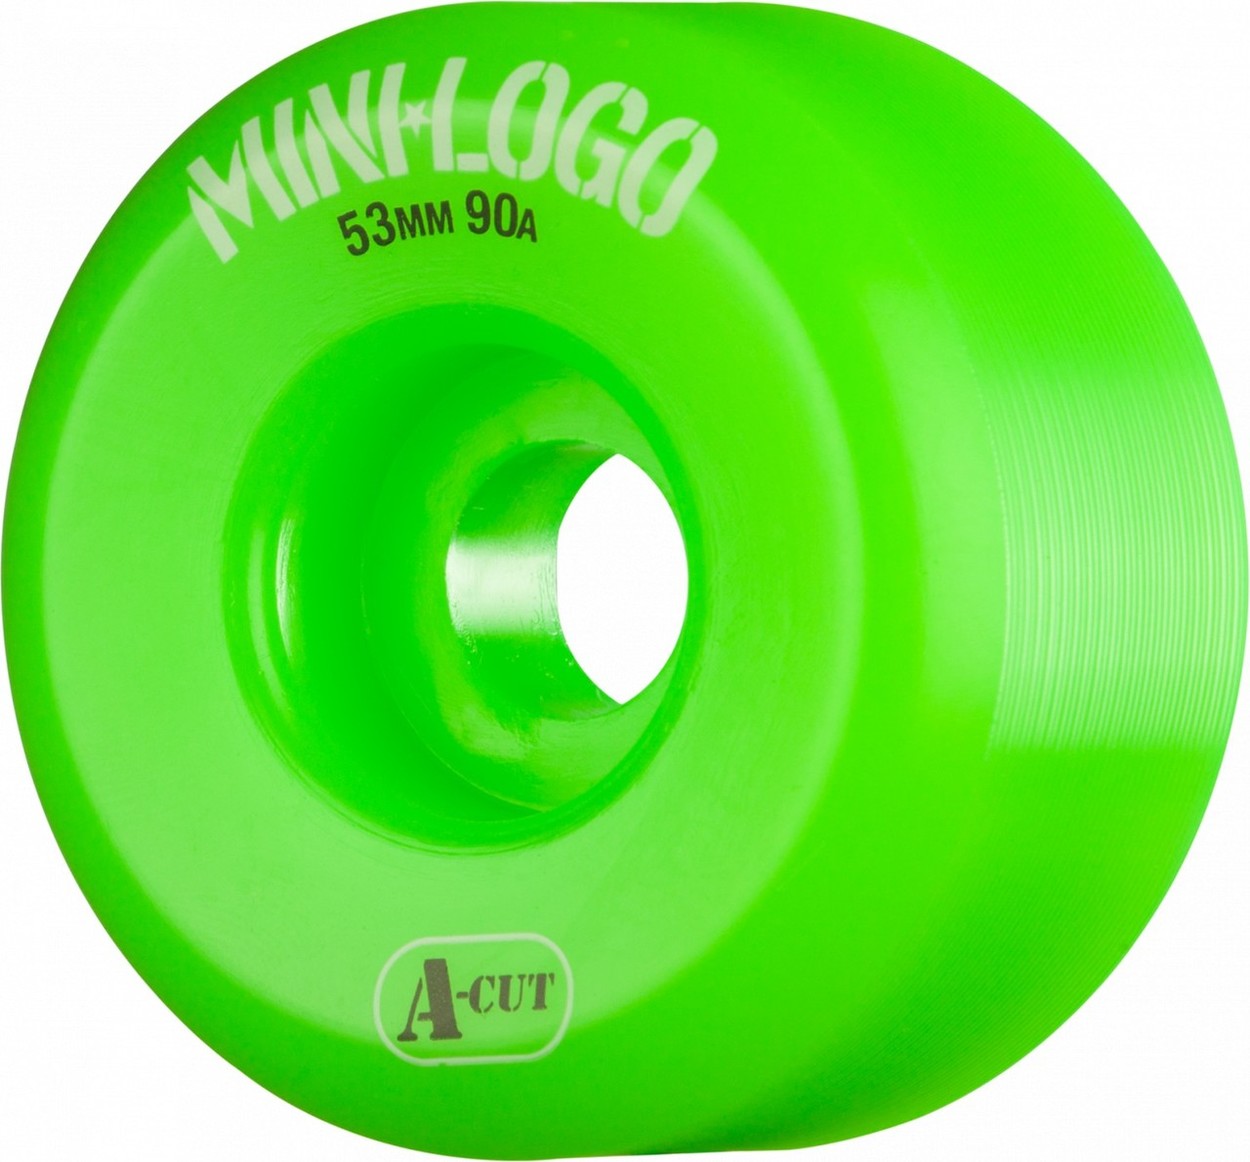 Mini Logo A-Cut 90a Skateboard Wheels - Green